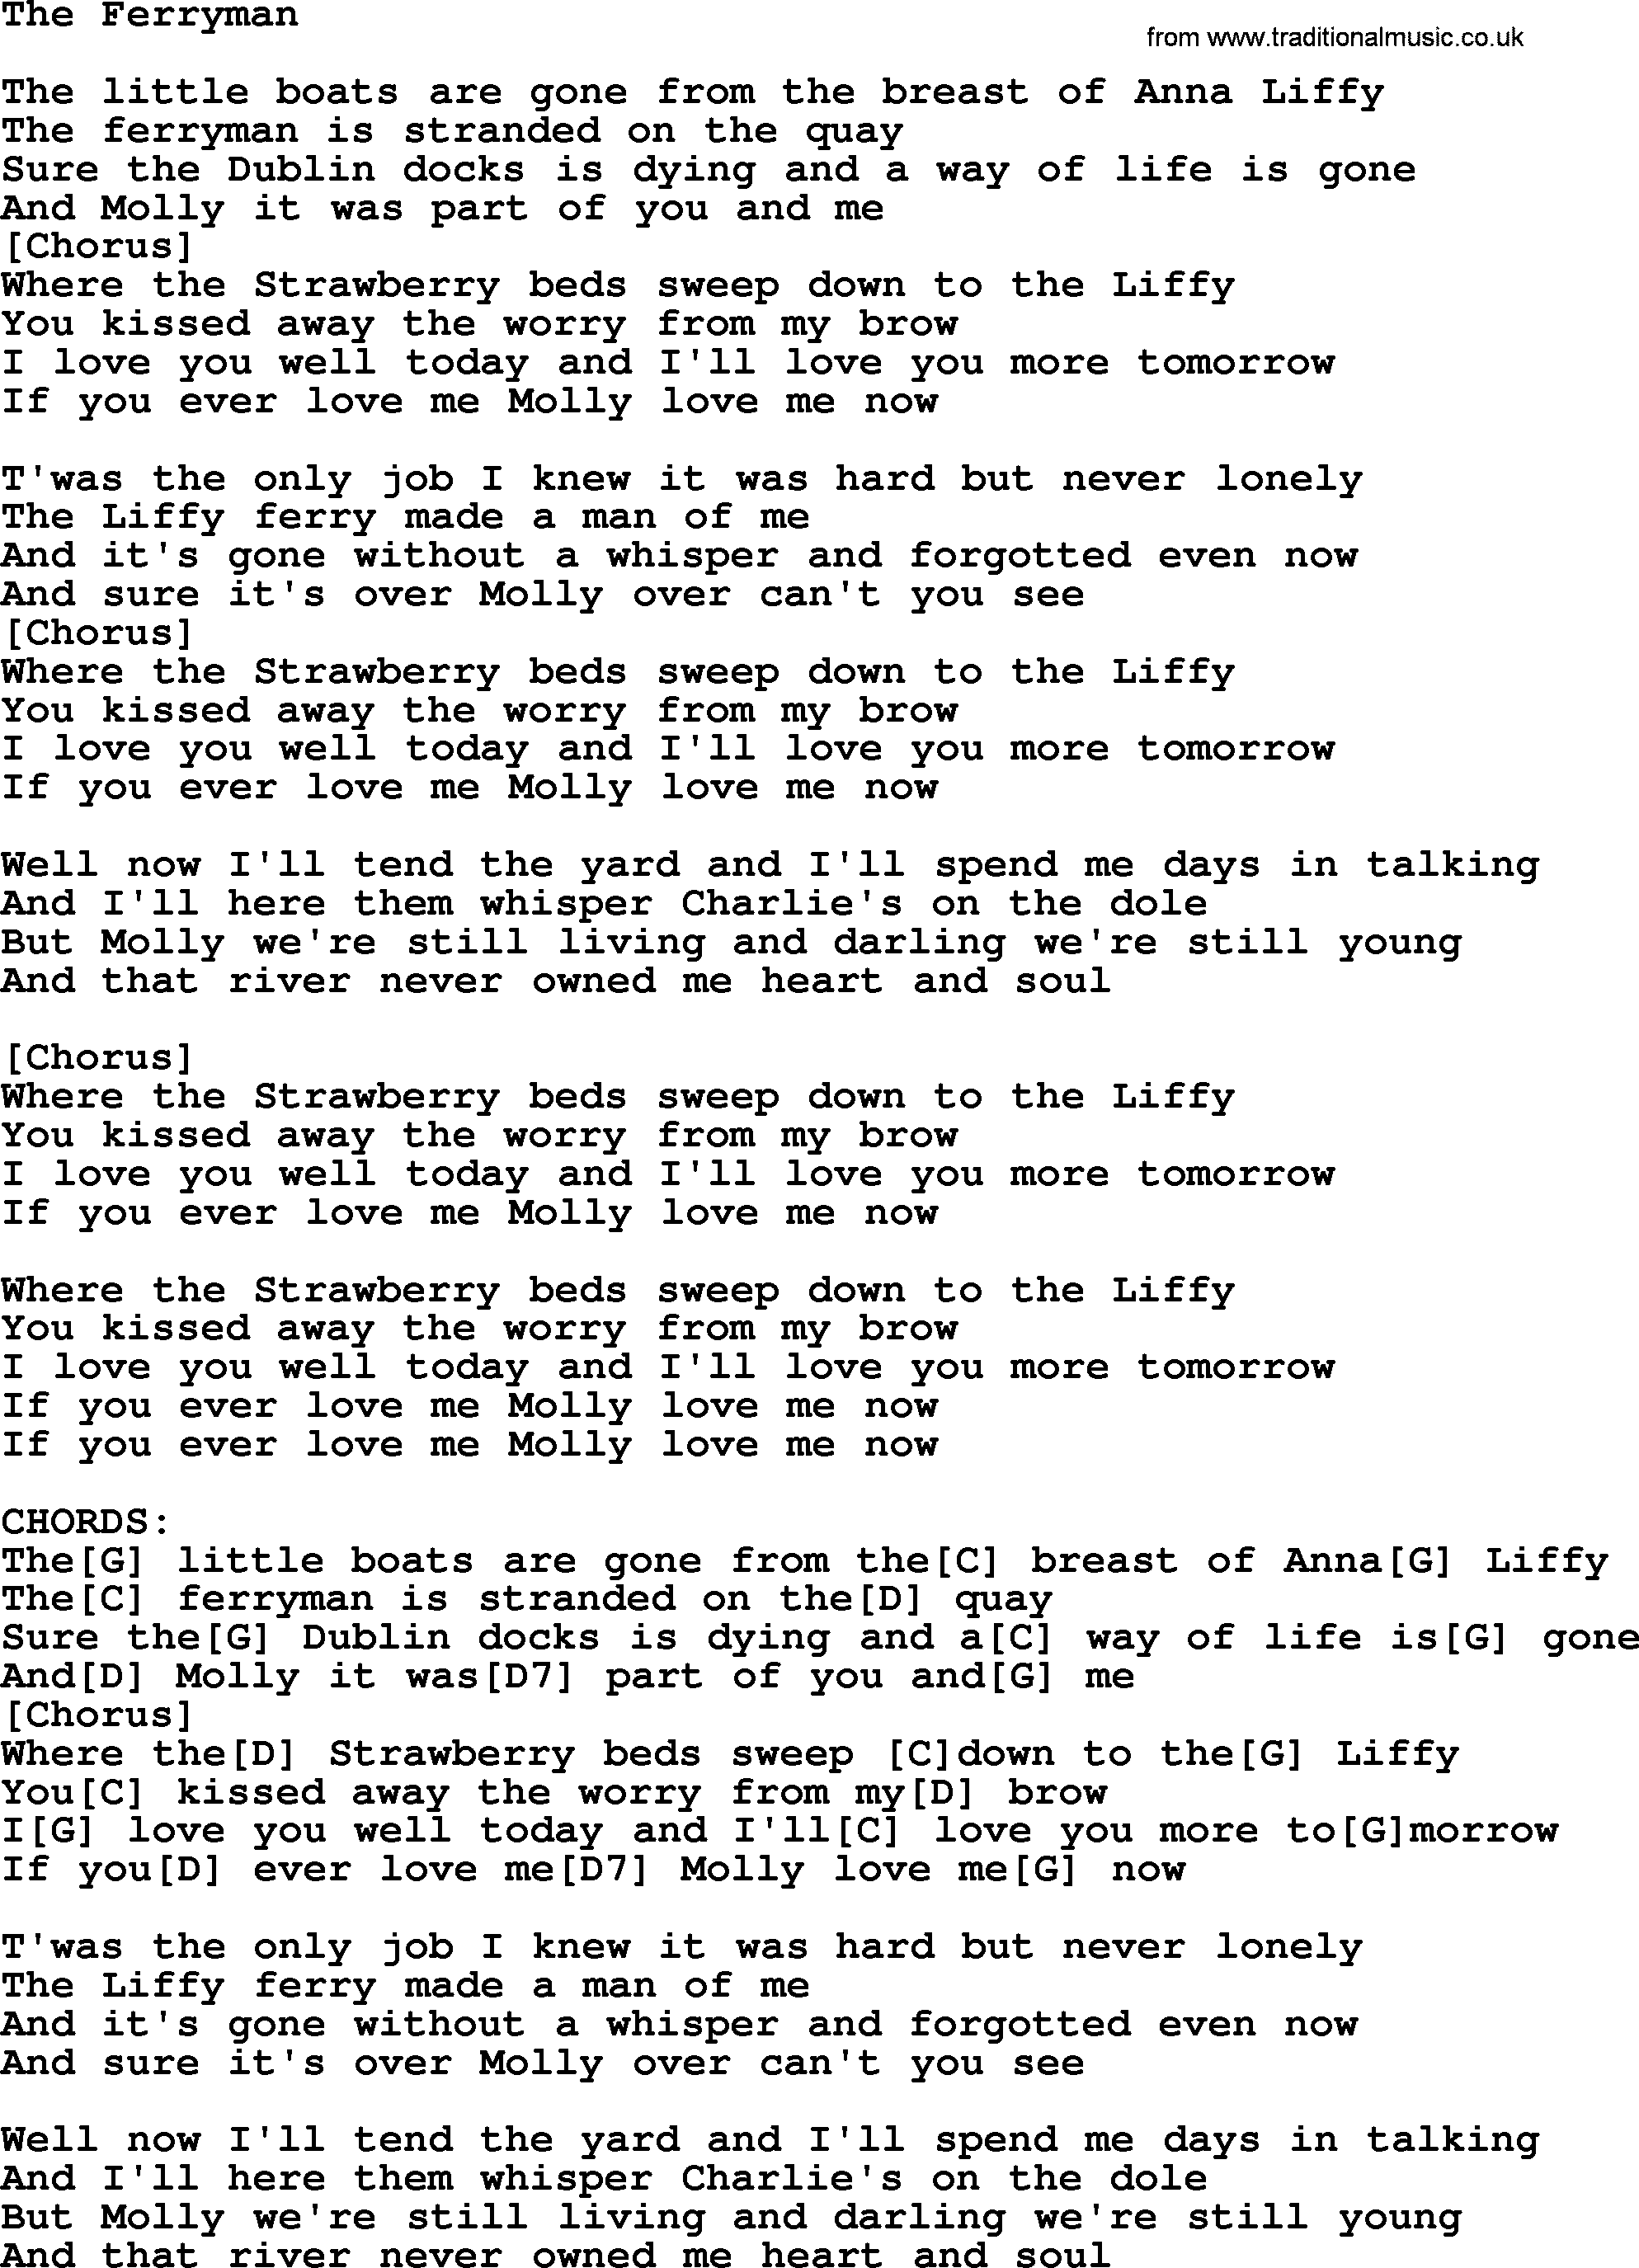 The Dubliners song: The Ferryman, lyrics